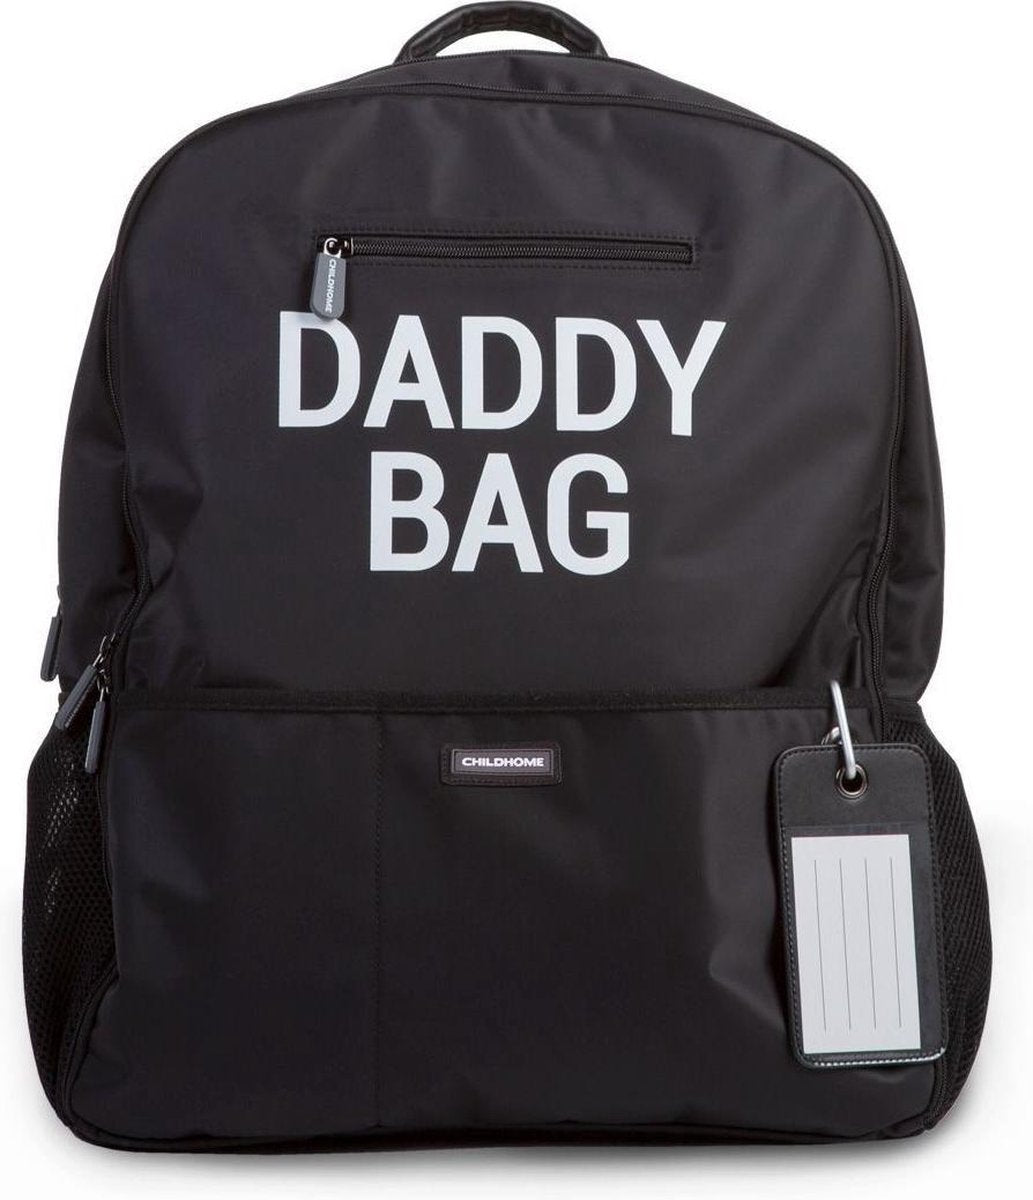 Daddy bag Zwart - Childhome